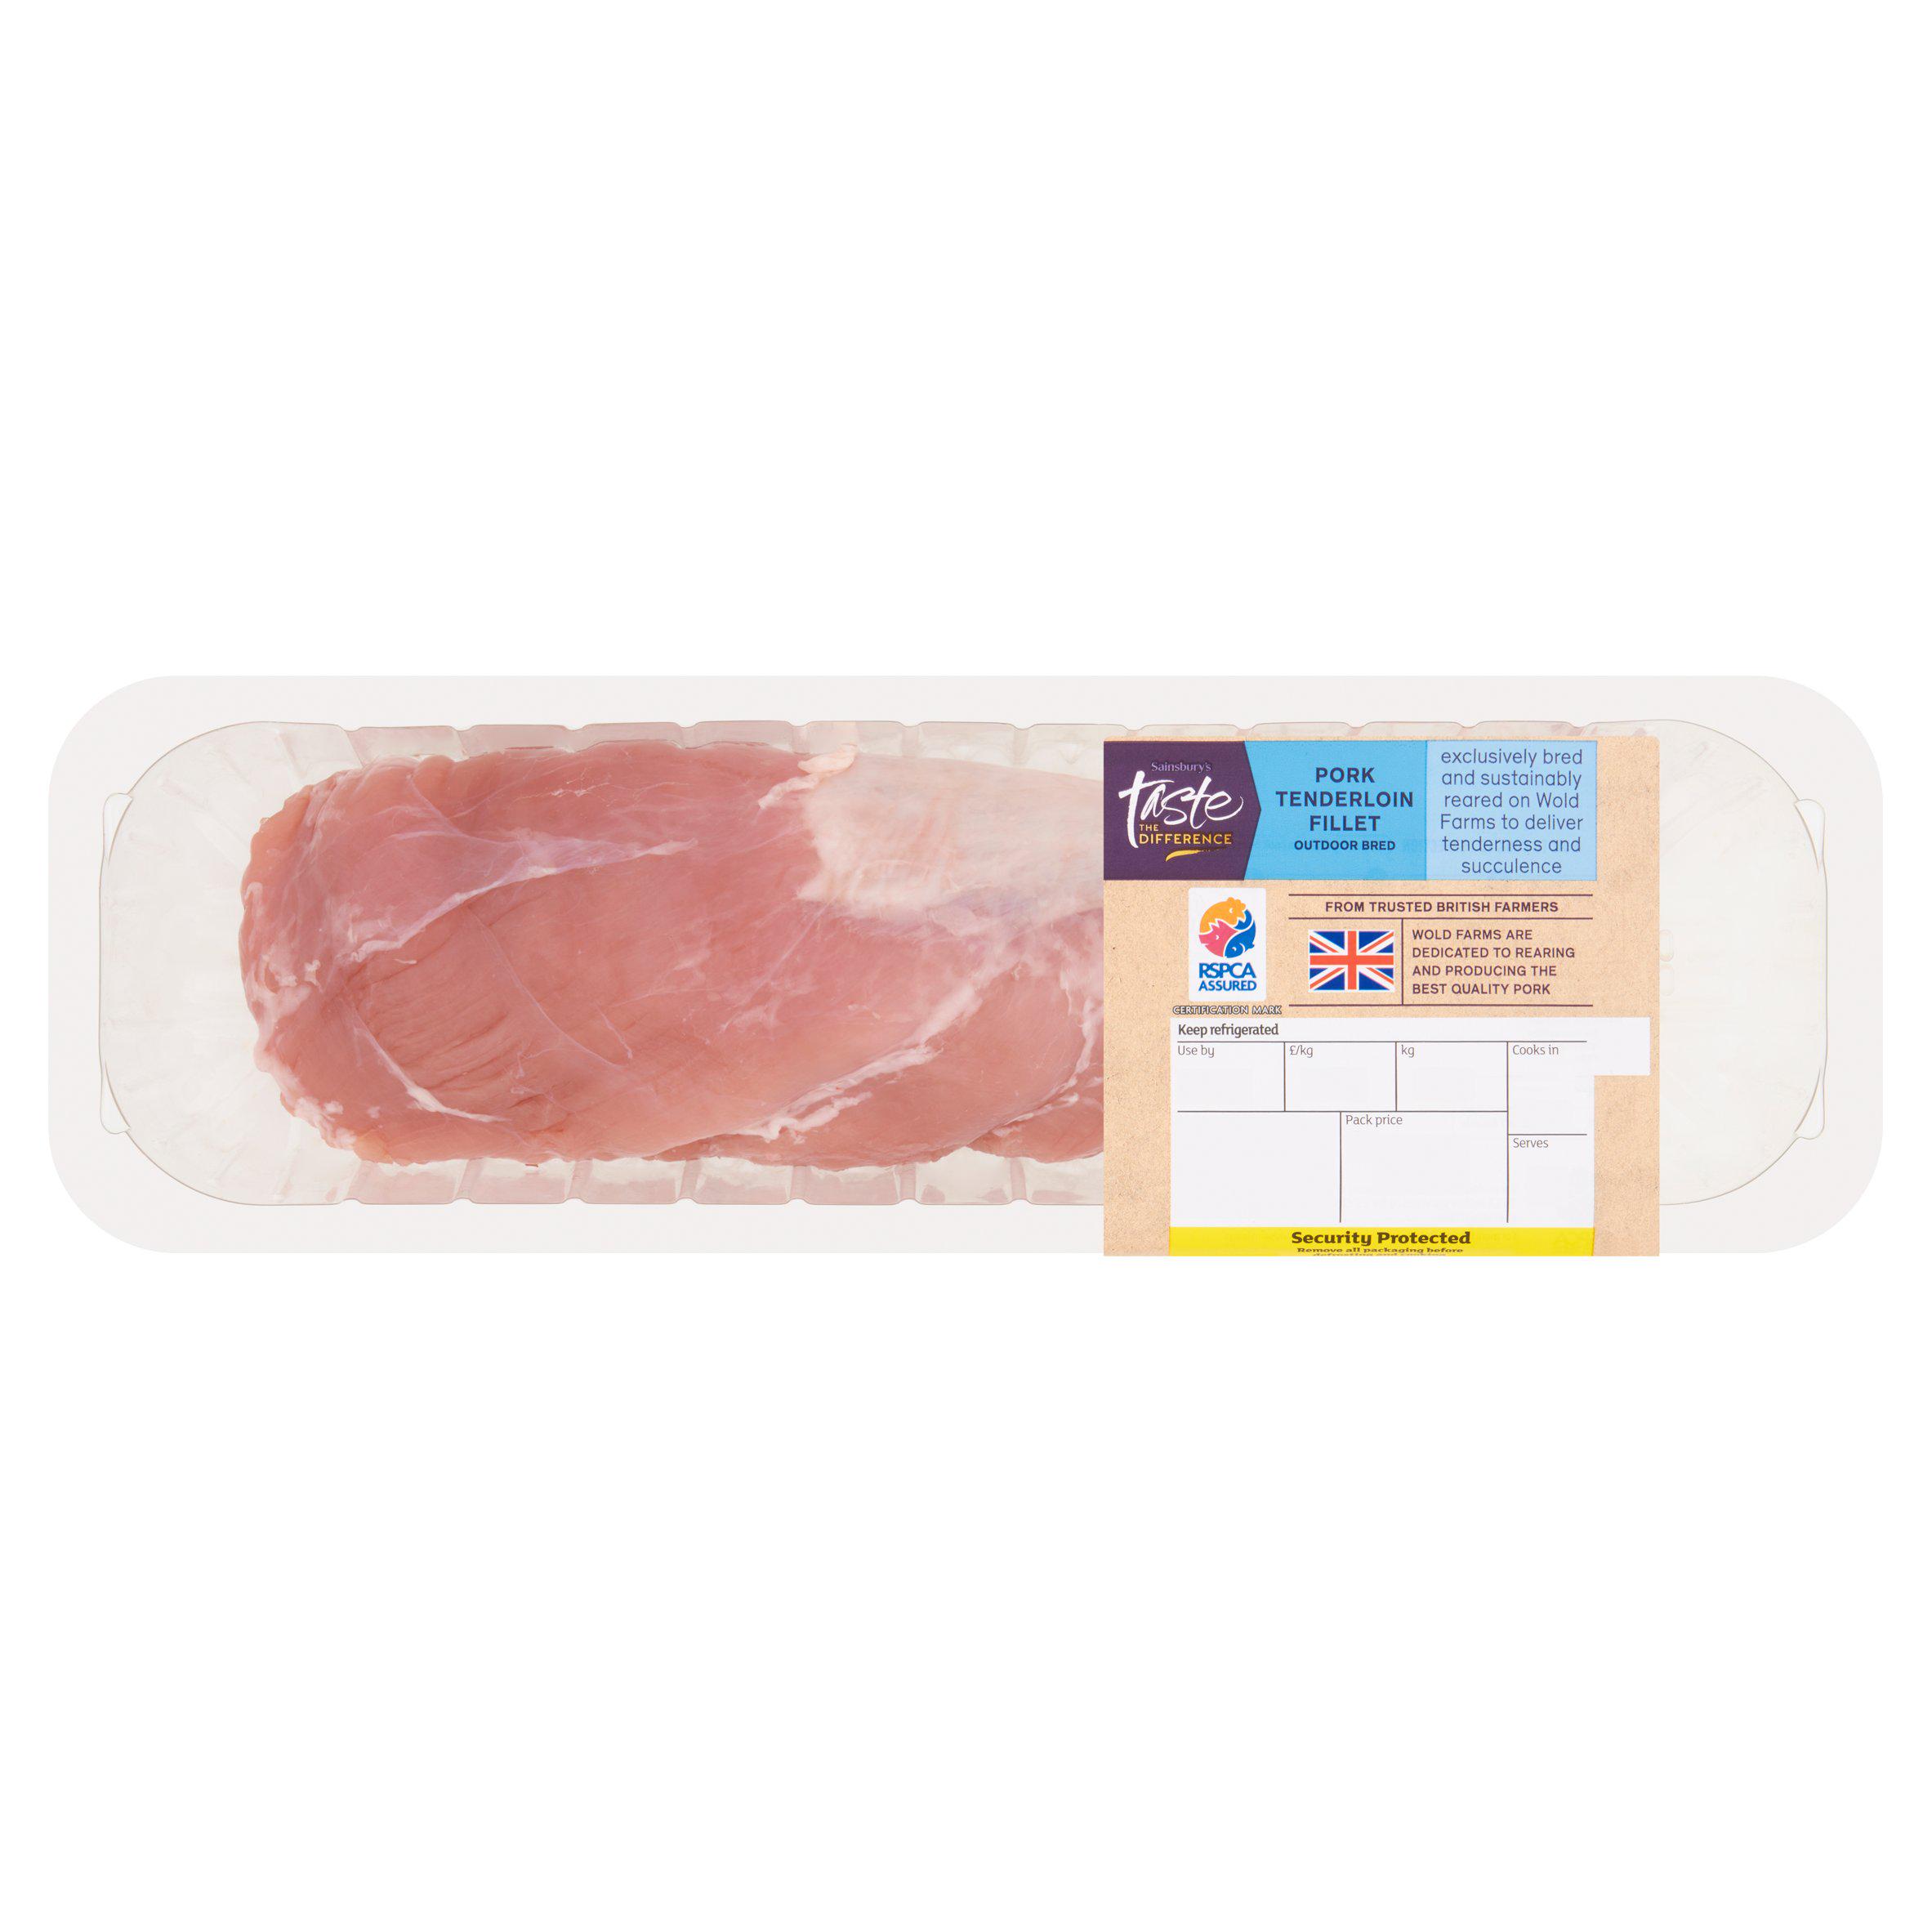 Sainsbury's Outdoor Bred British Pork Tenderloin Fillet, Taste The Difference